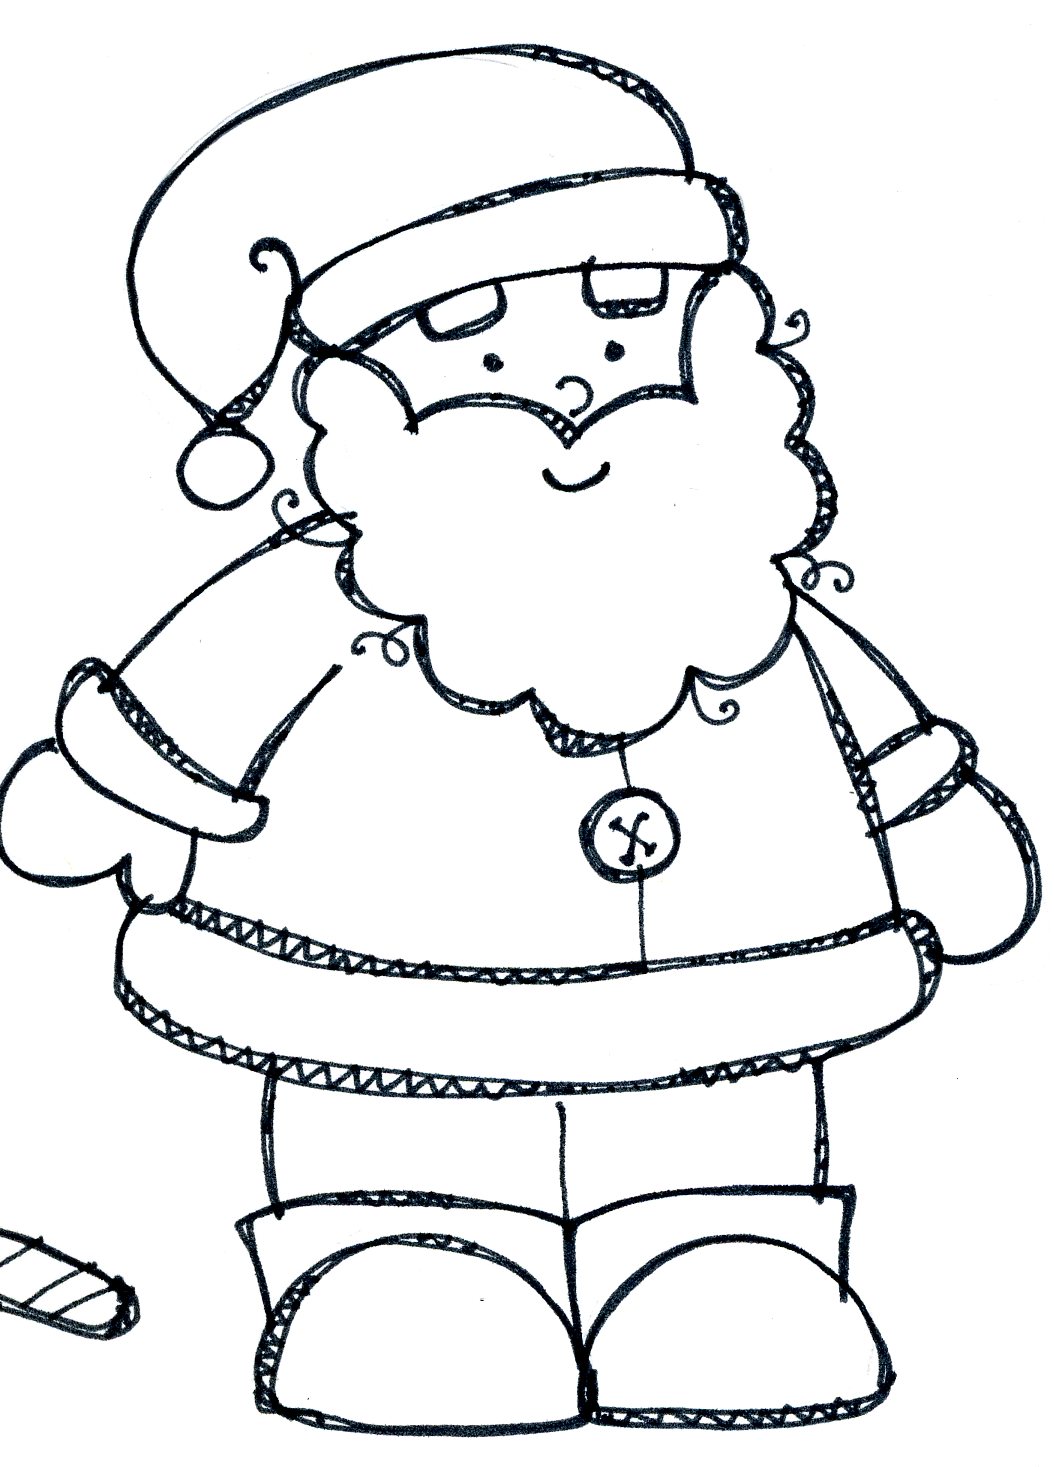 Санта Клаус рисунок карандашом